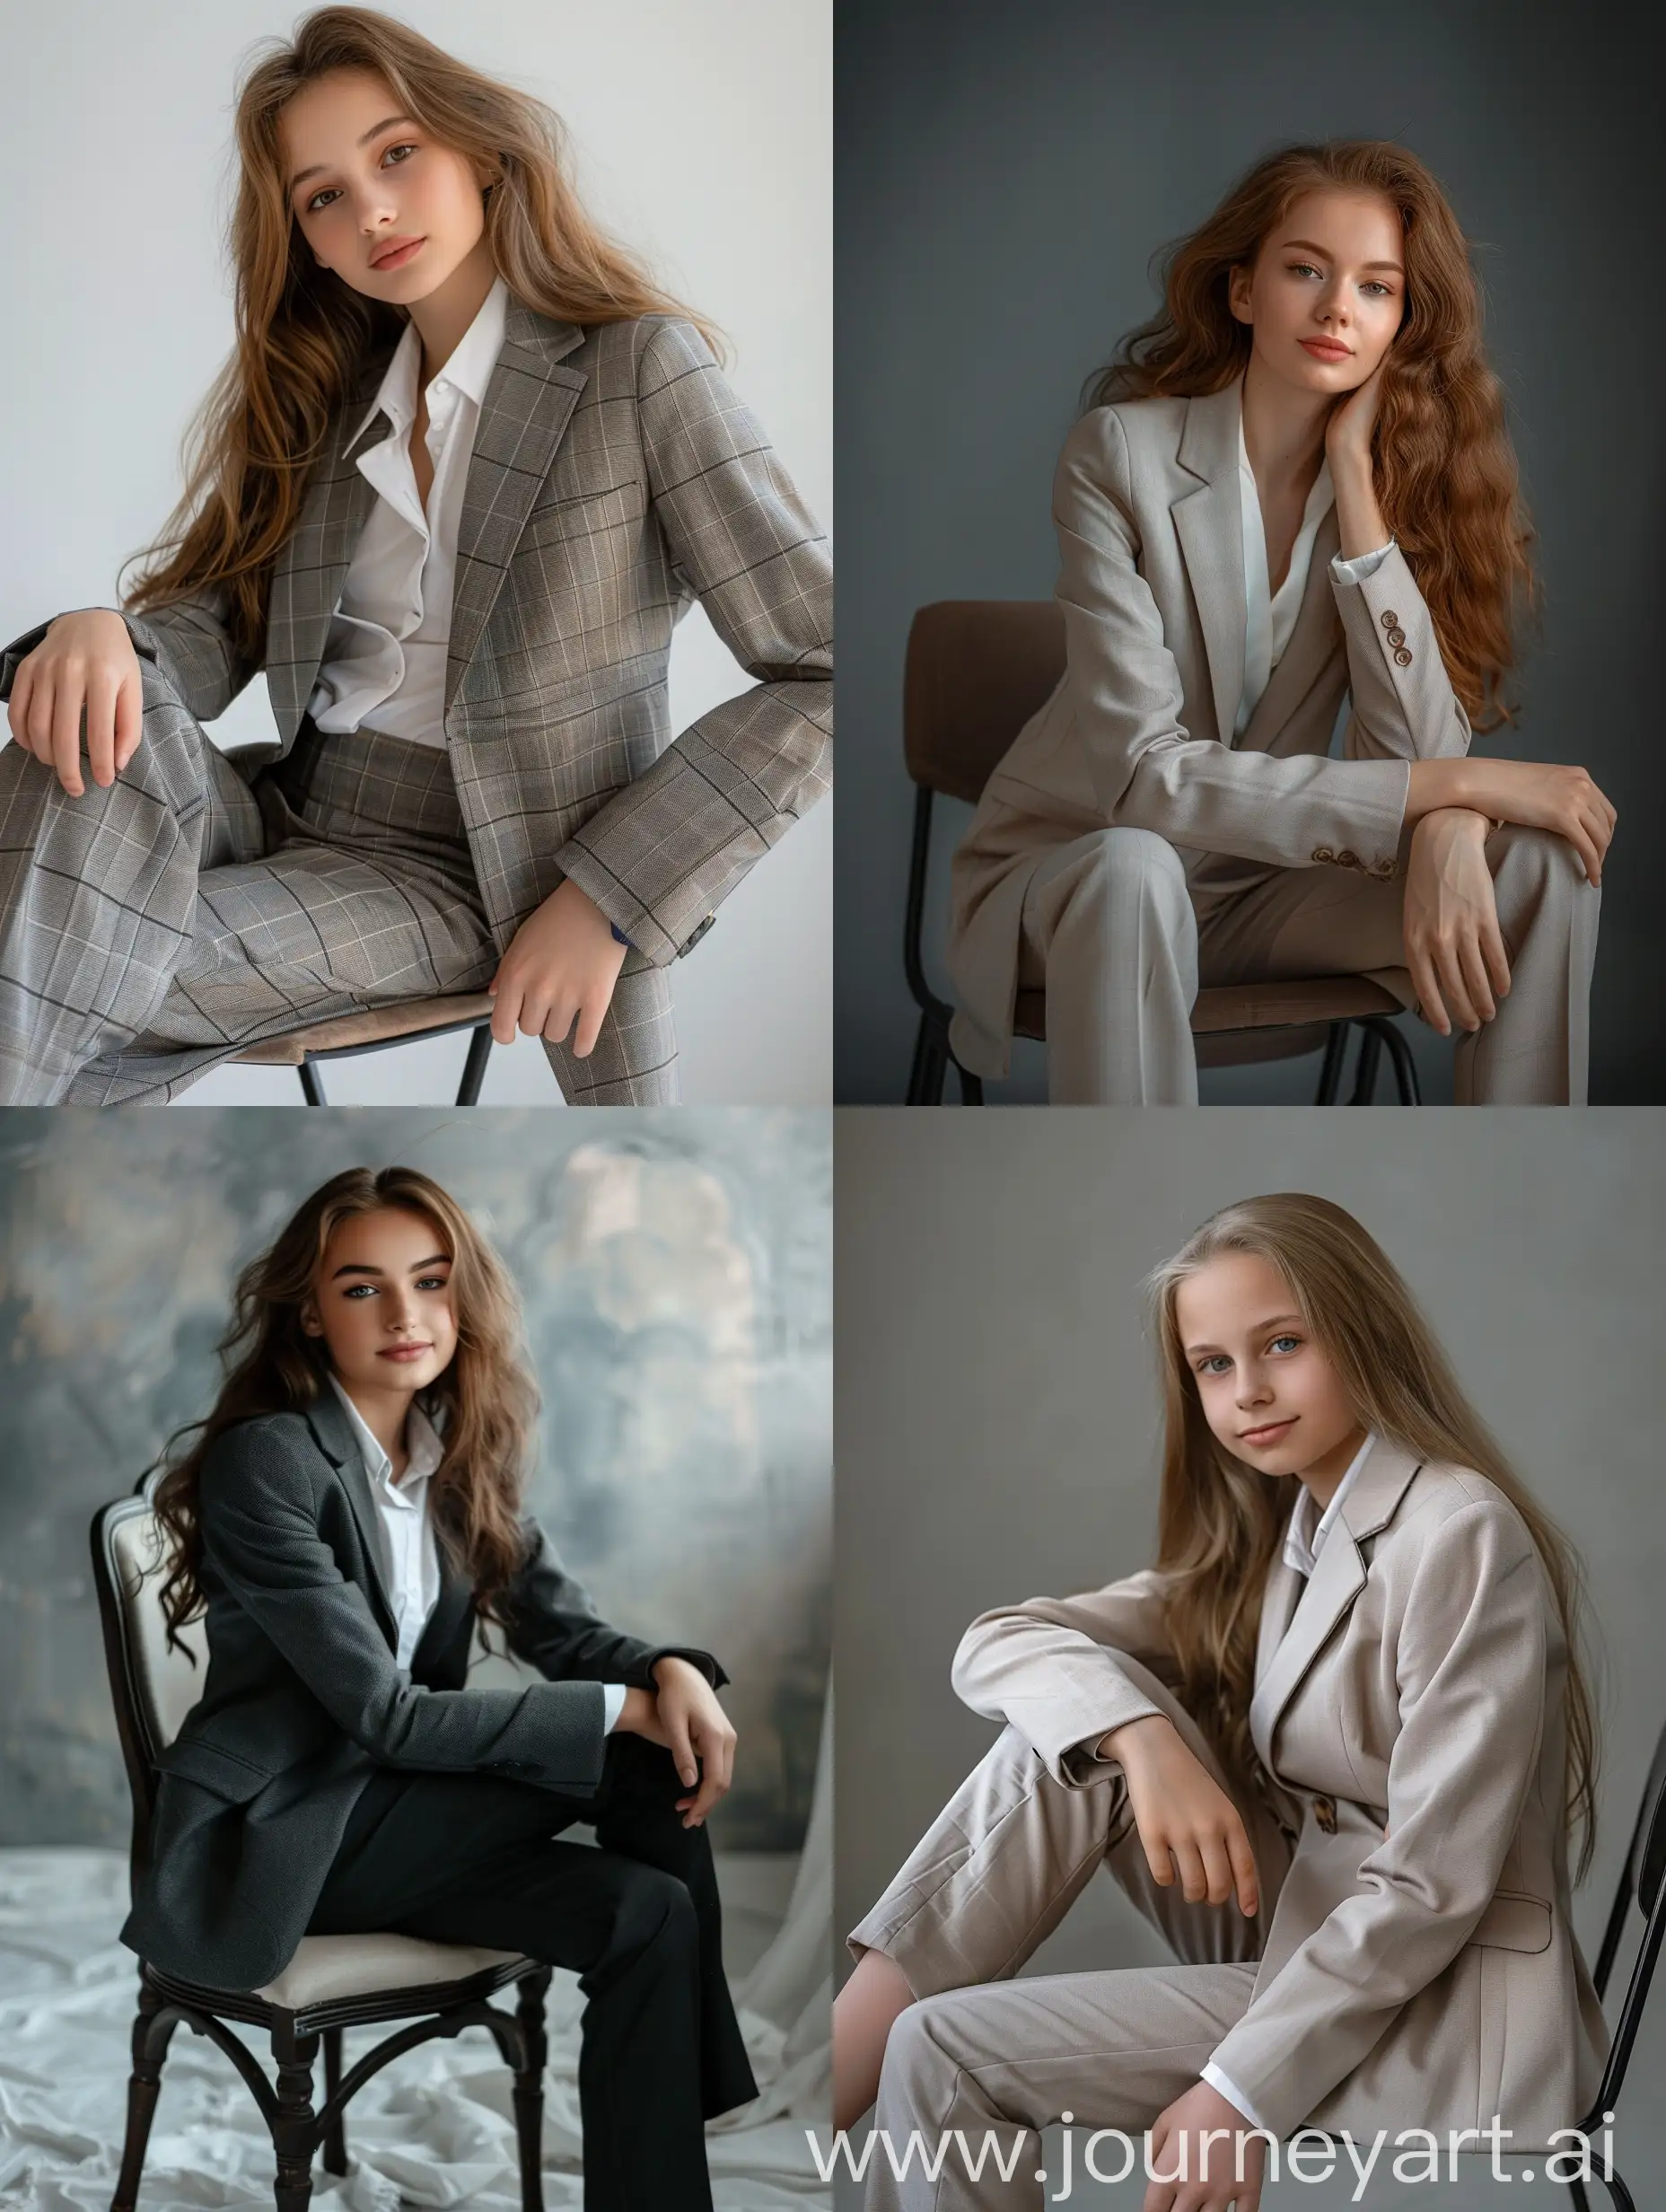 Elegant-Studio-Photoshoot-Graceful-Model-in-Classic-Suit-with-Light-Smile